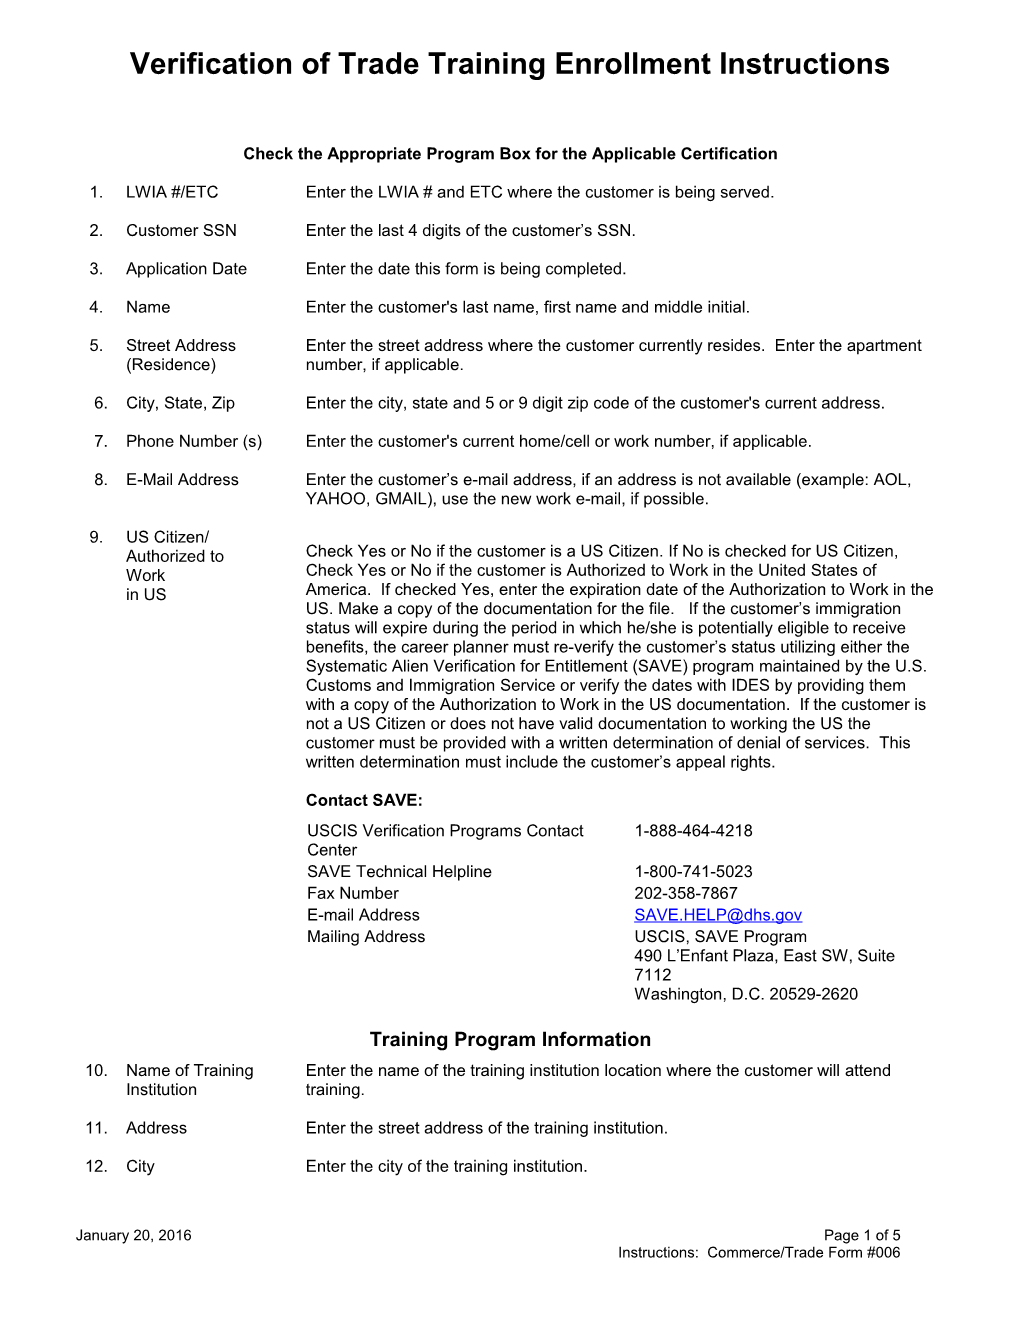 Form #006 Verification of TAAEA Training Enrollment Instructions (MS Word) 12-01-13